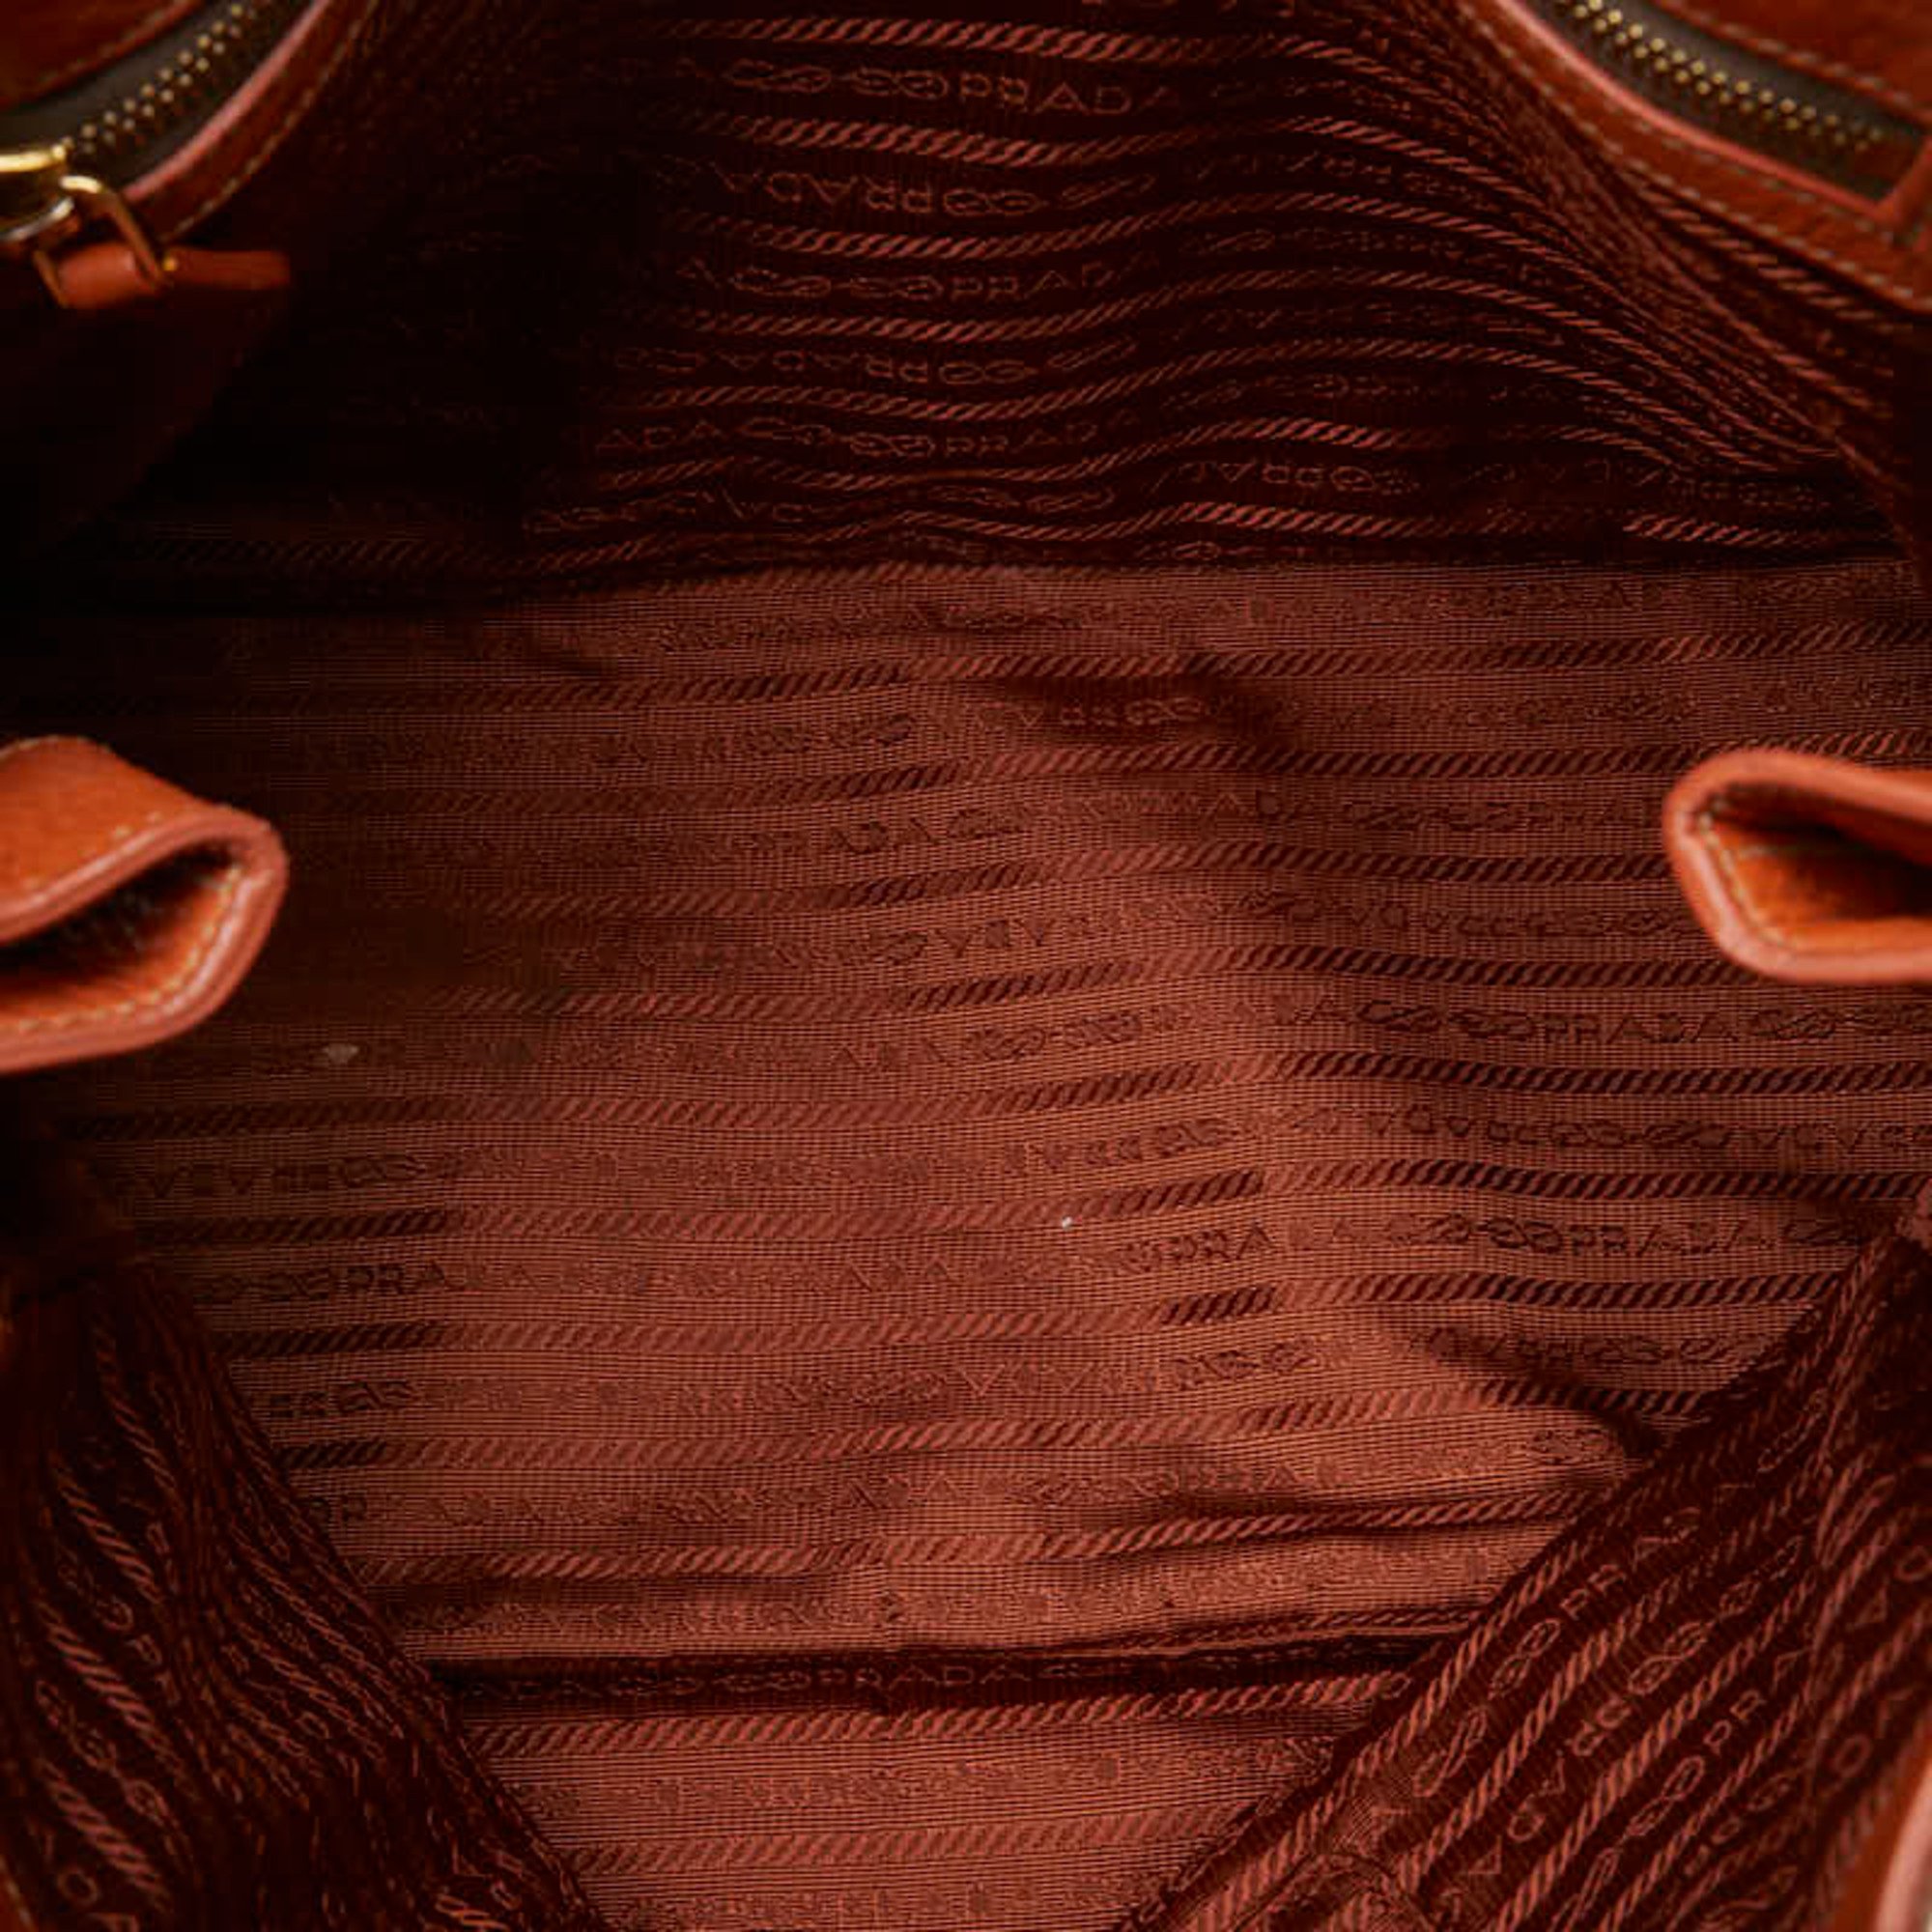 Prada Tote Bag BR4482 Orange Leather Women's PRADA